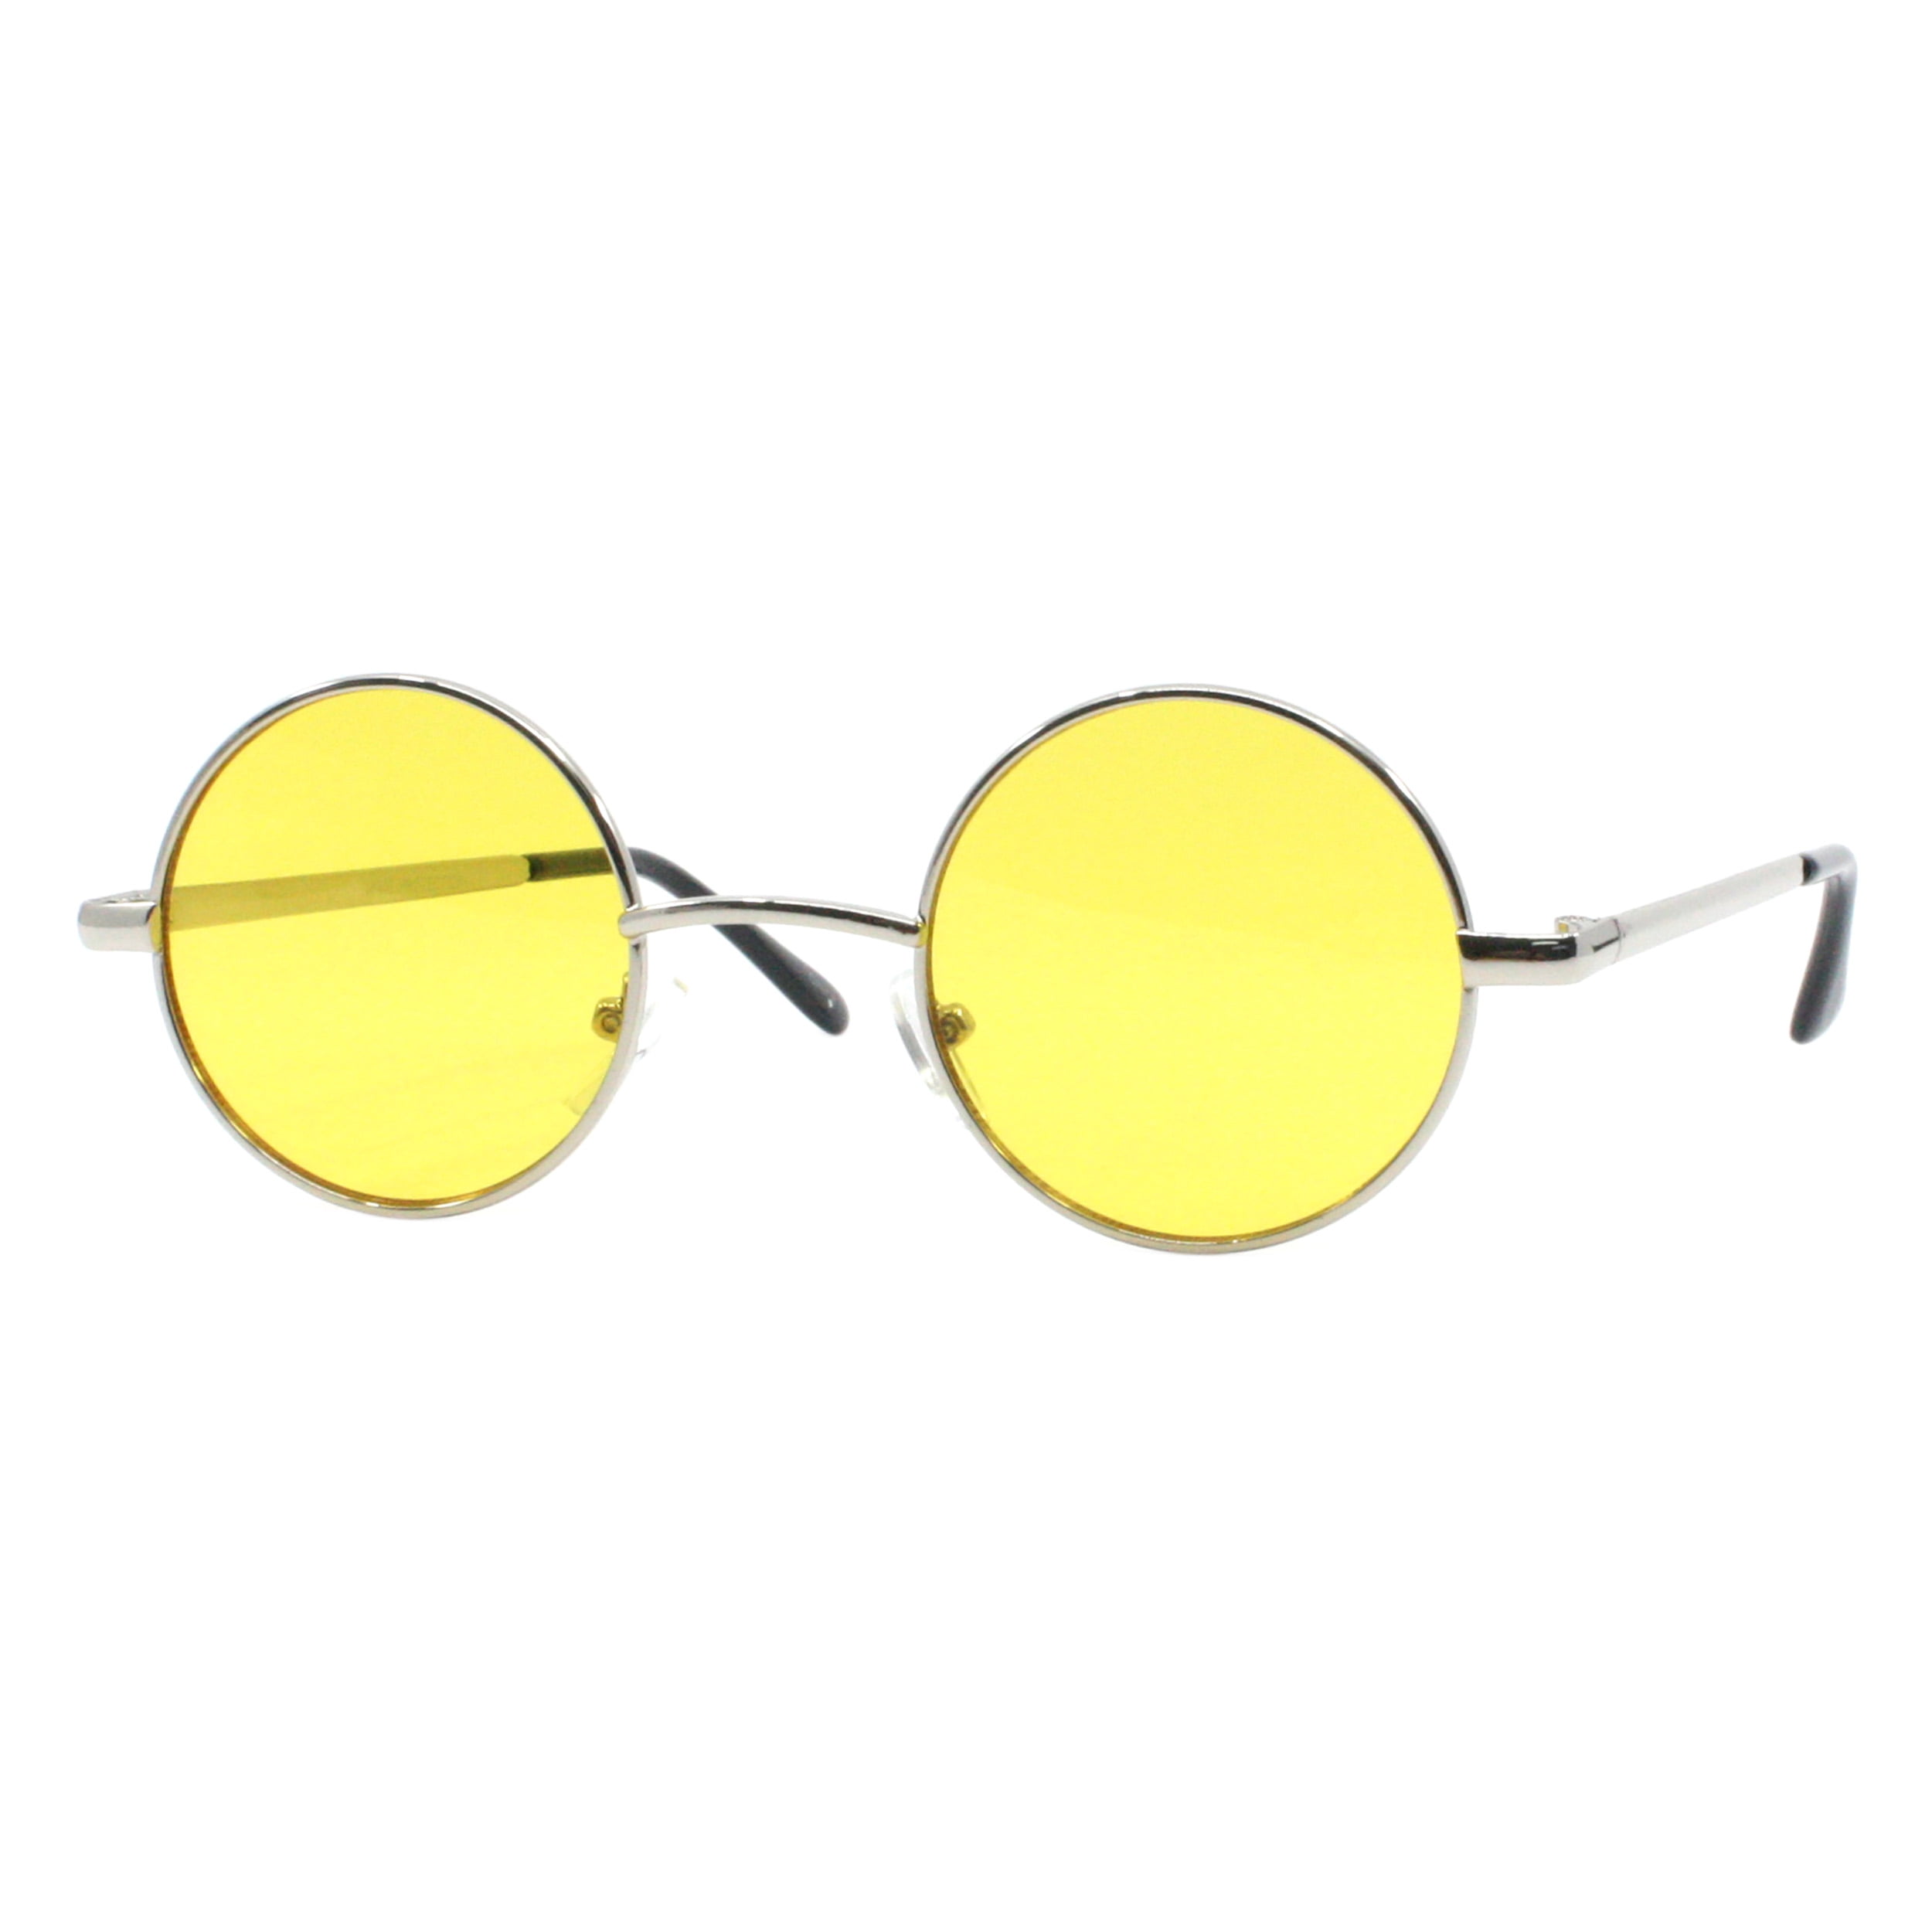 Buy Voyage Grey Round Sunglasses for Men & Women - 3185Mg3879 (50) online